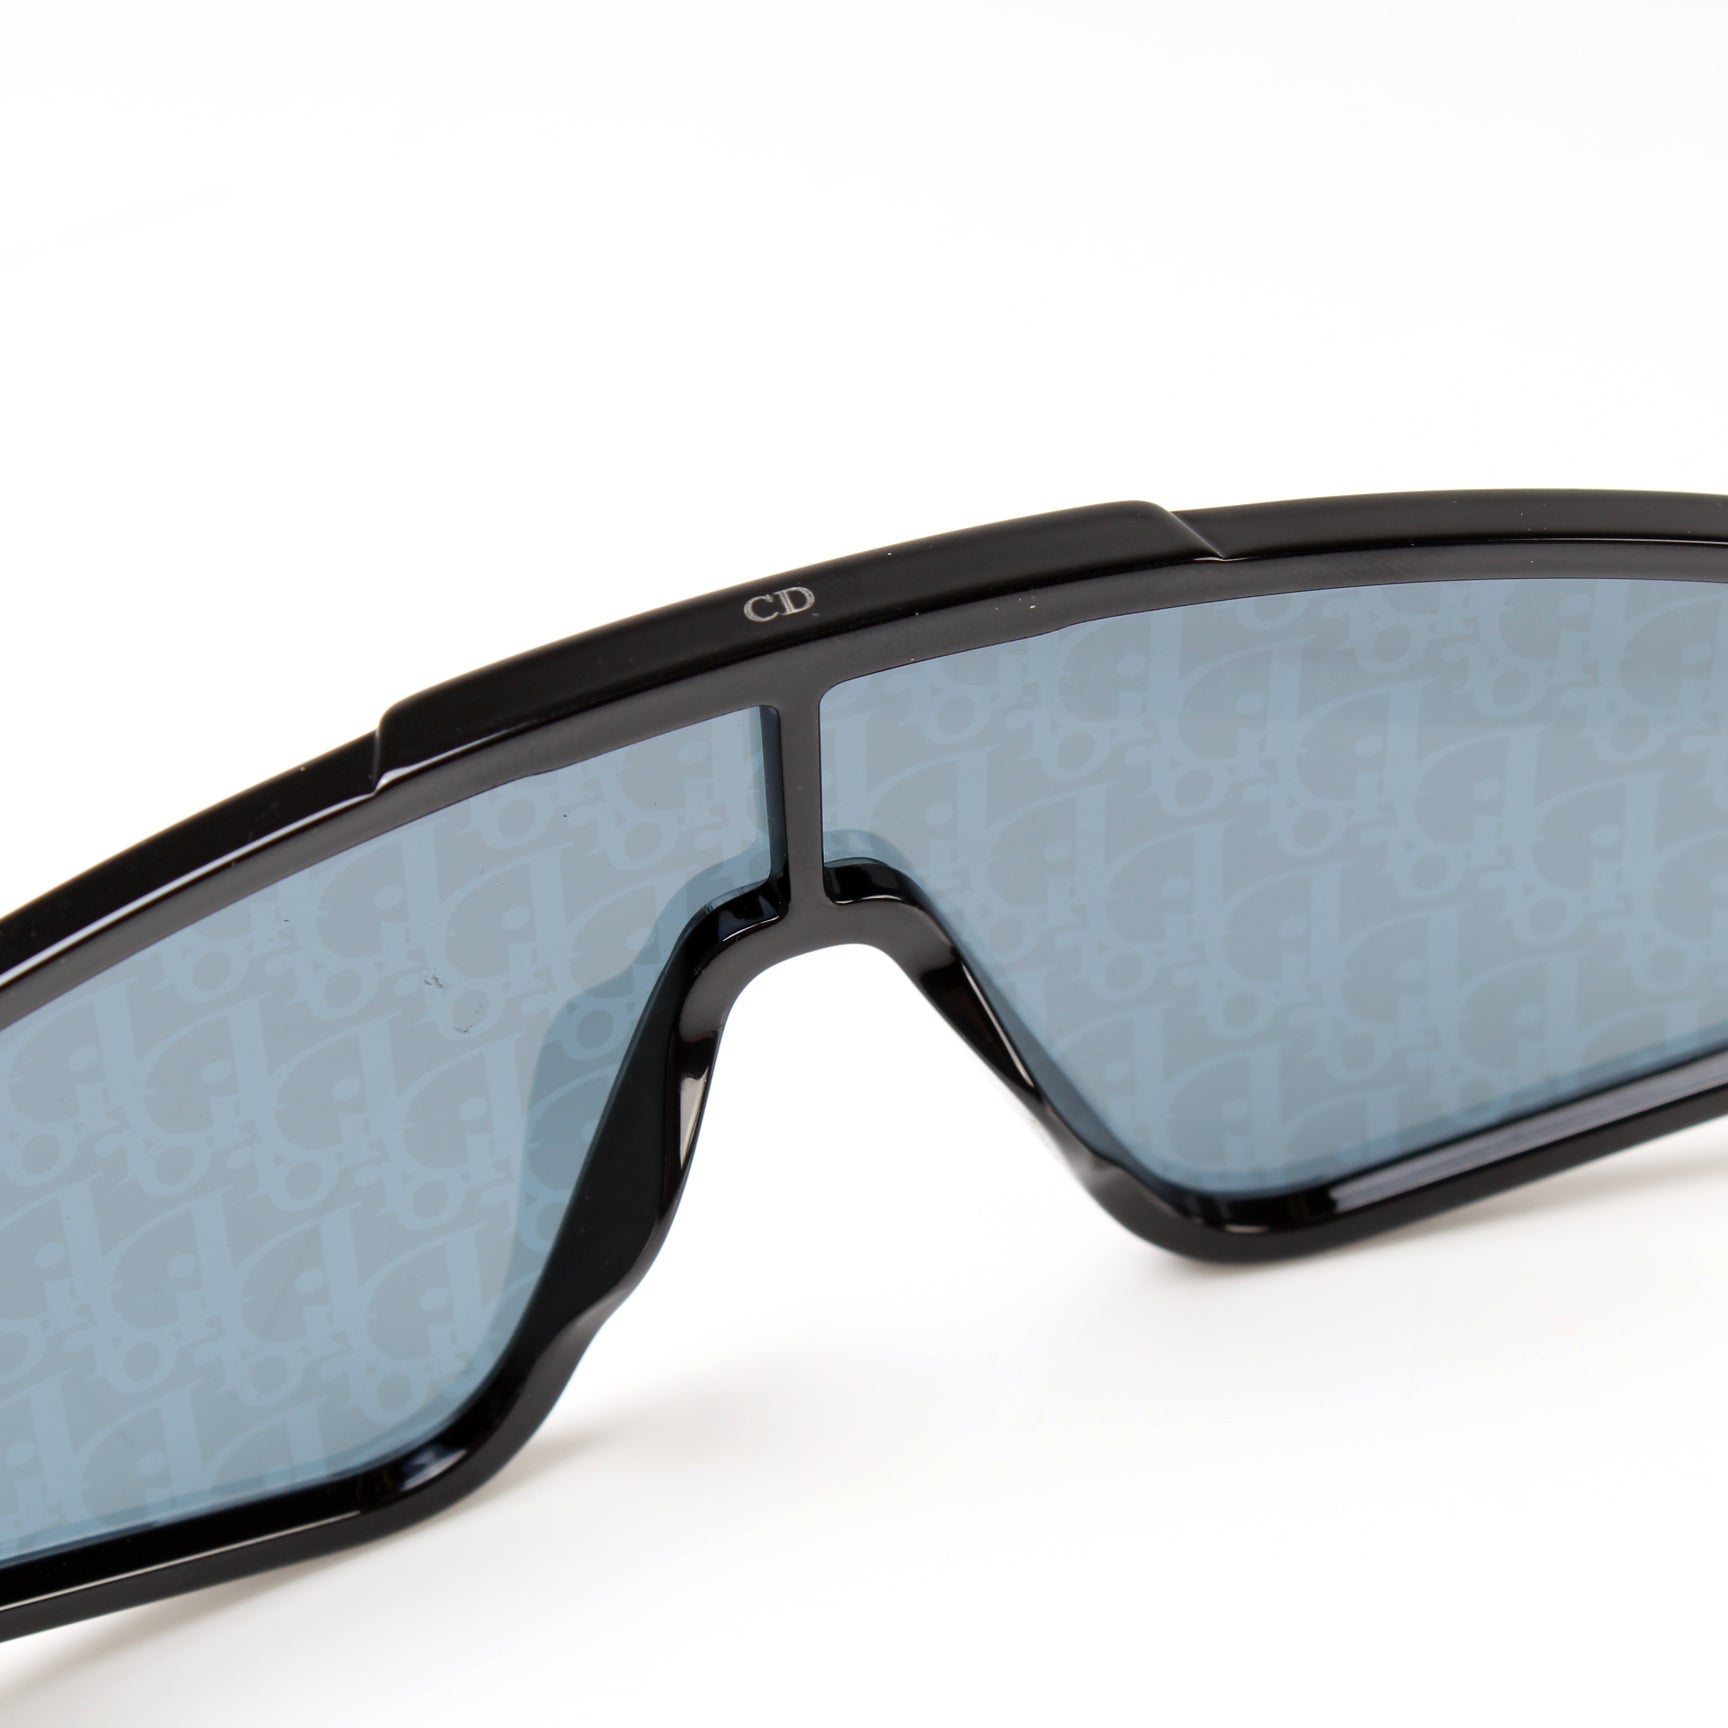 Black DiorXtrem MU monogram mask acetate sunglasses